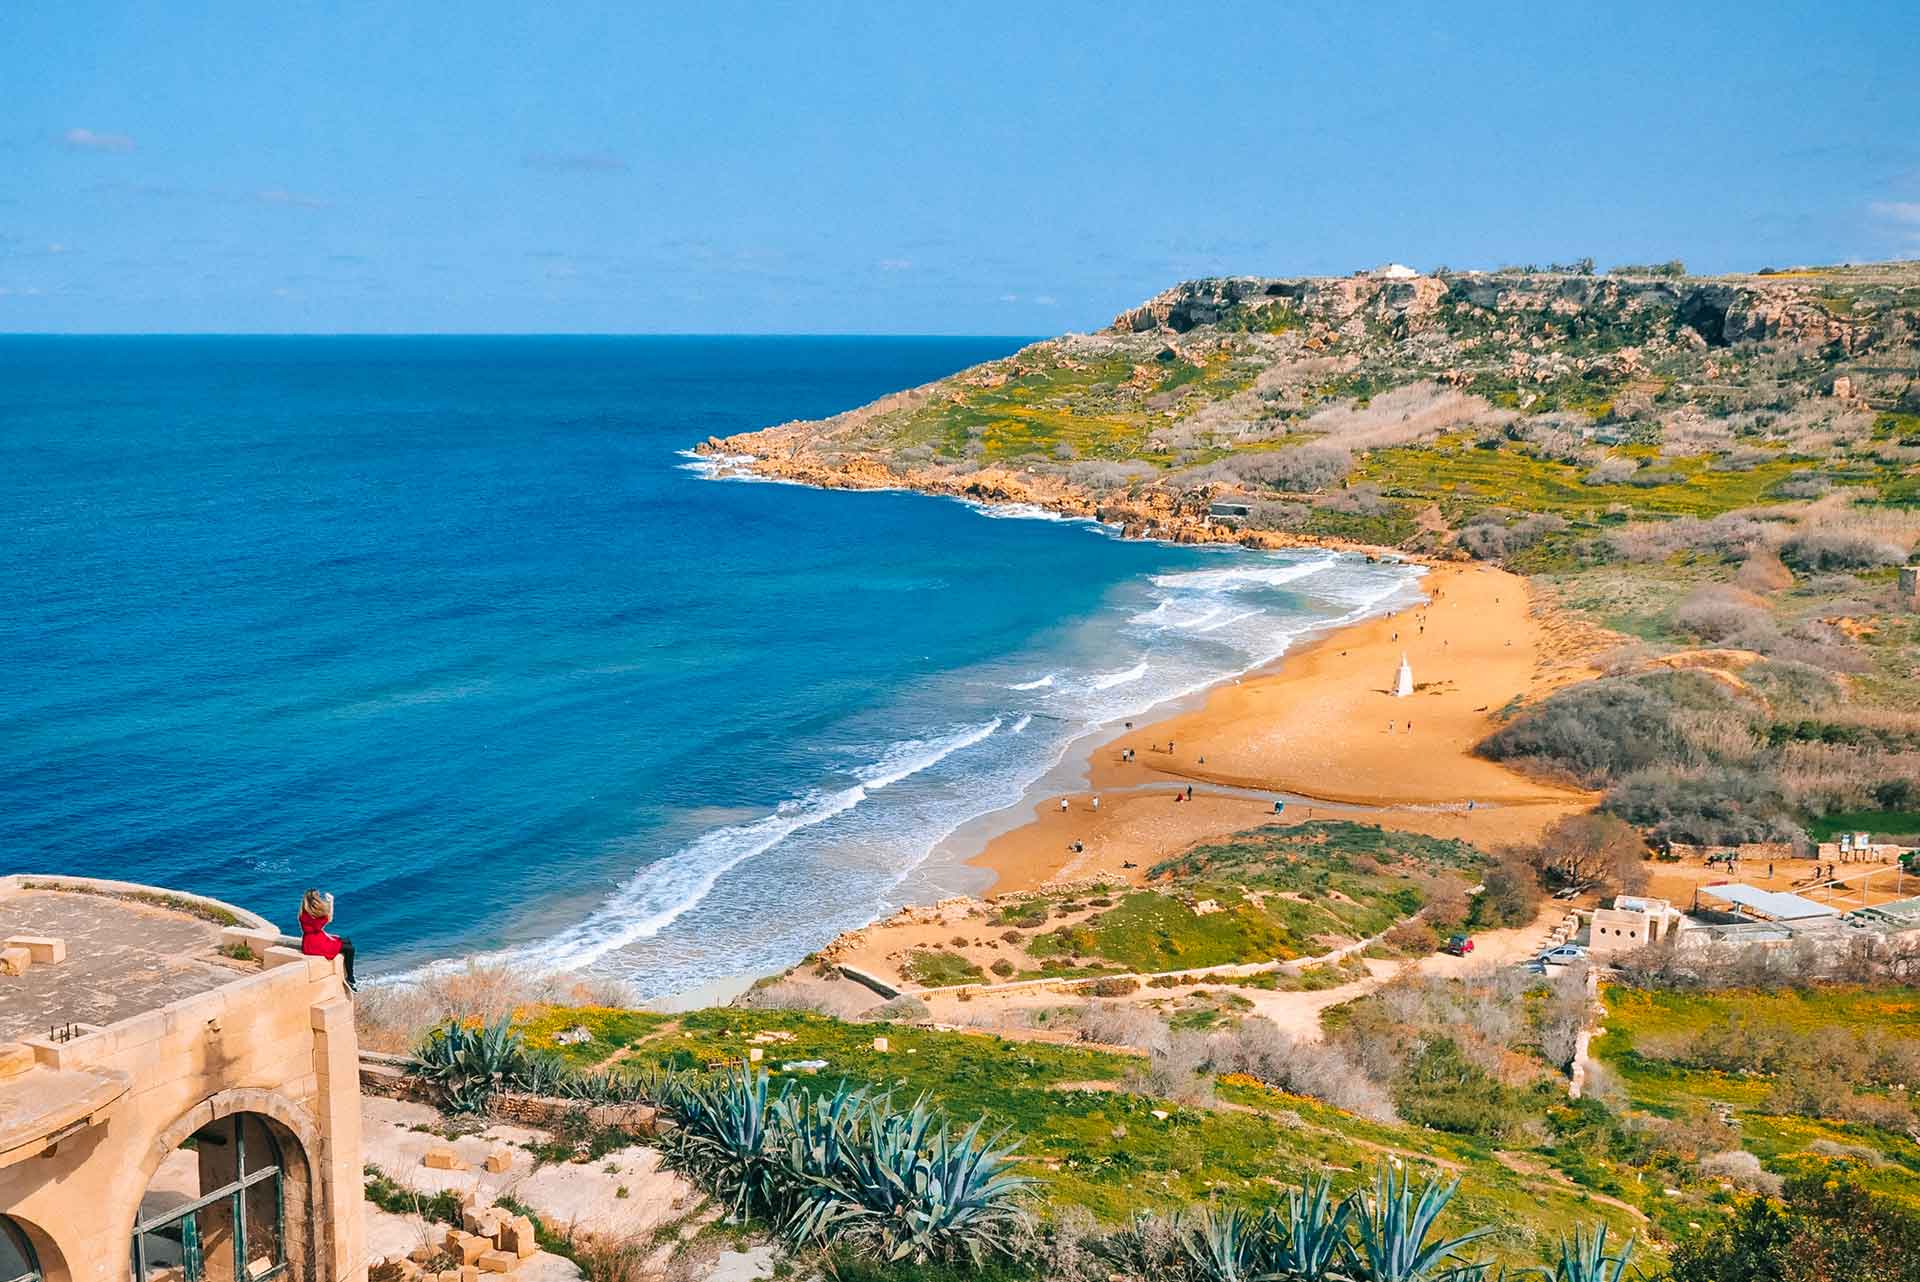 Gozo's main beach, Ramla Bay, during springtime